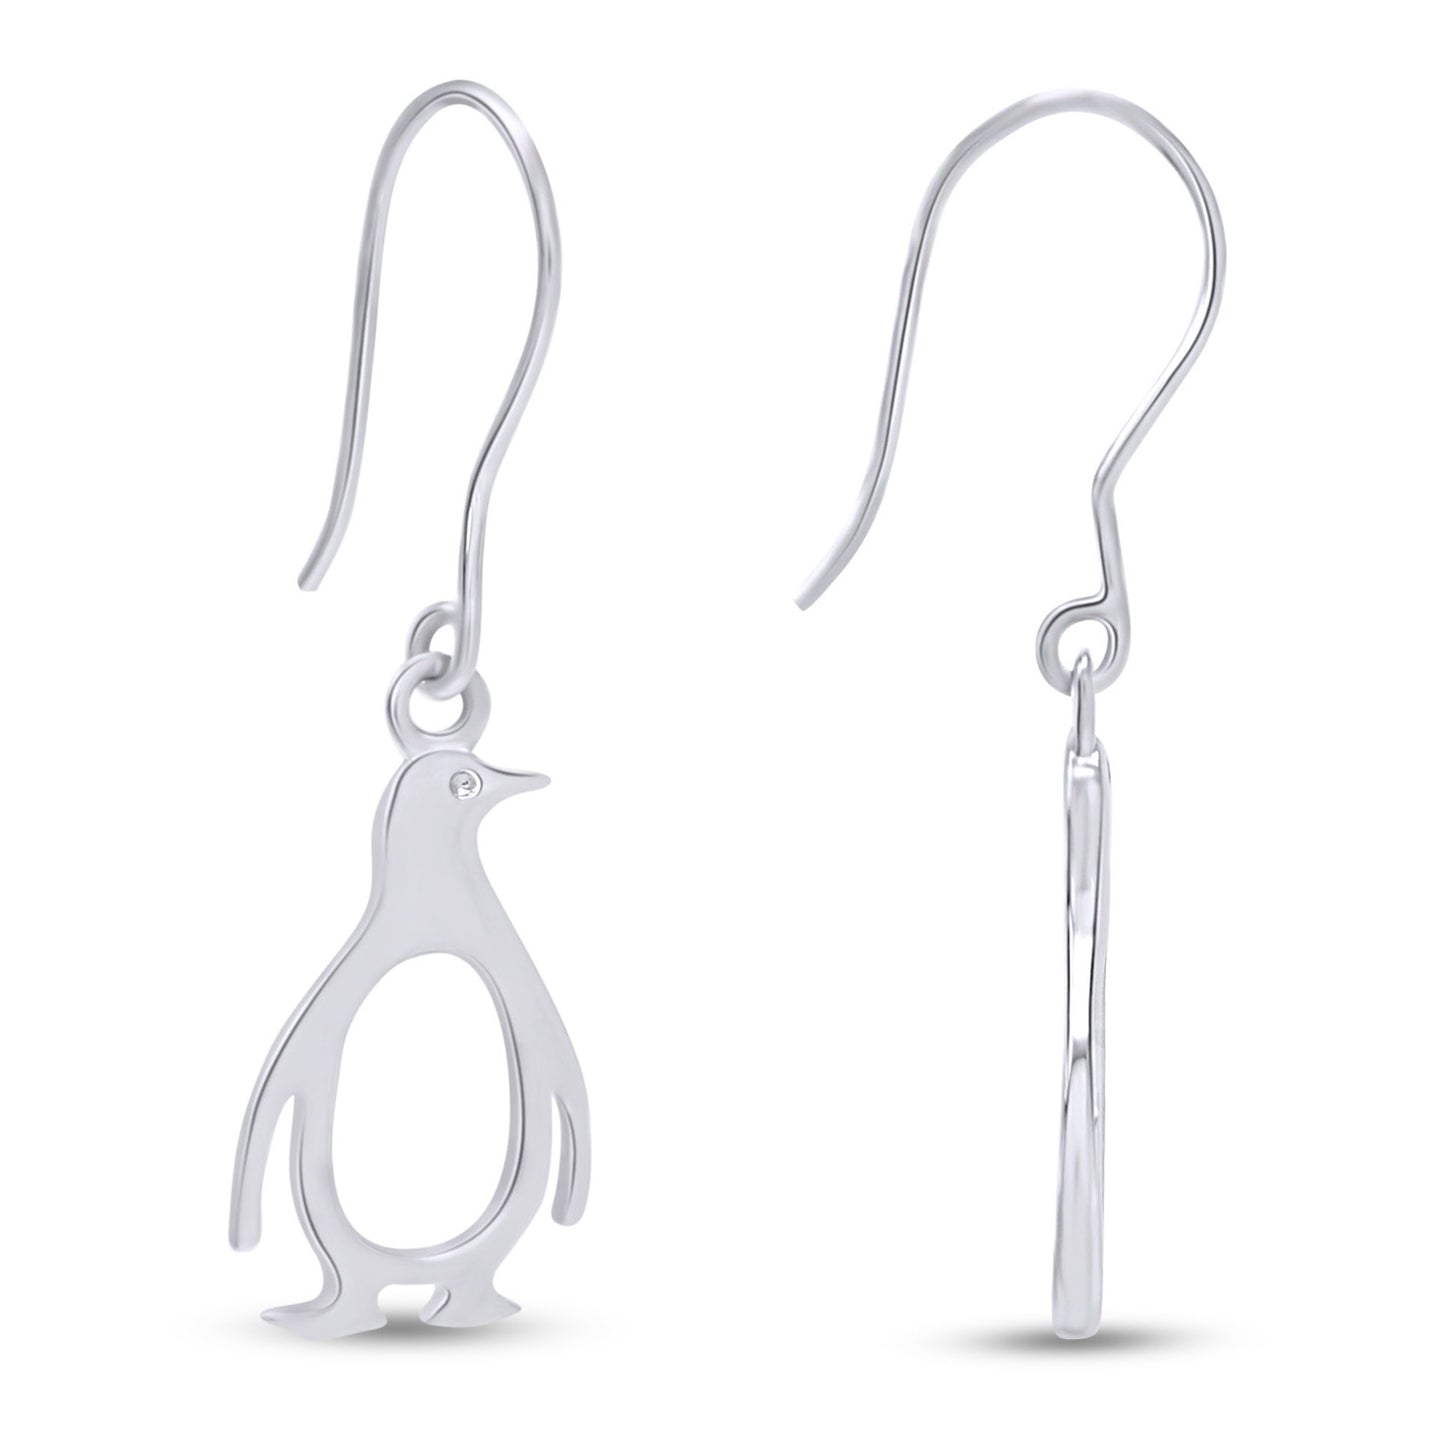 Load image into Gallery viewer, Penguin Hook Earrings Jewelry for Women in 925 Sterling Silver
